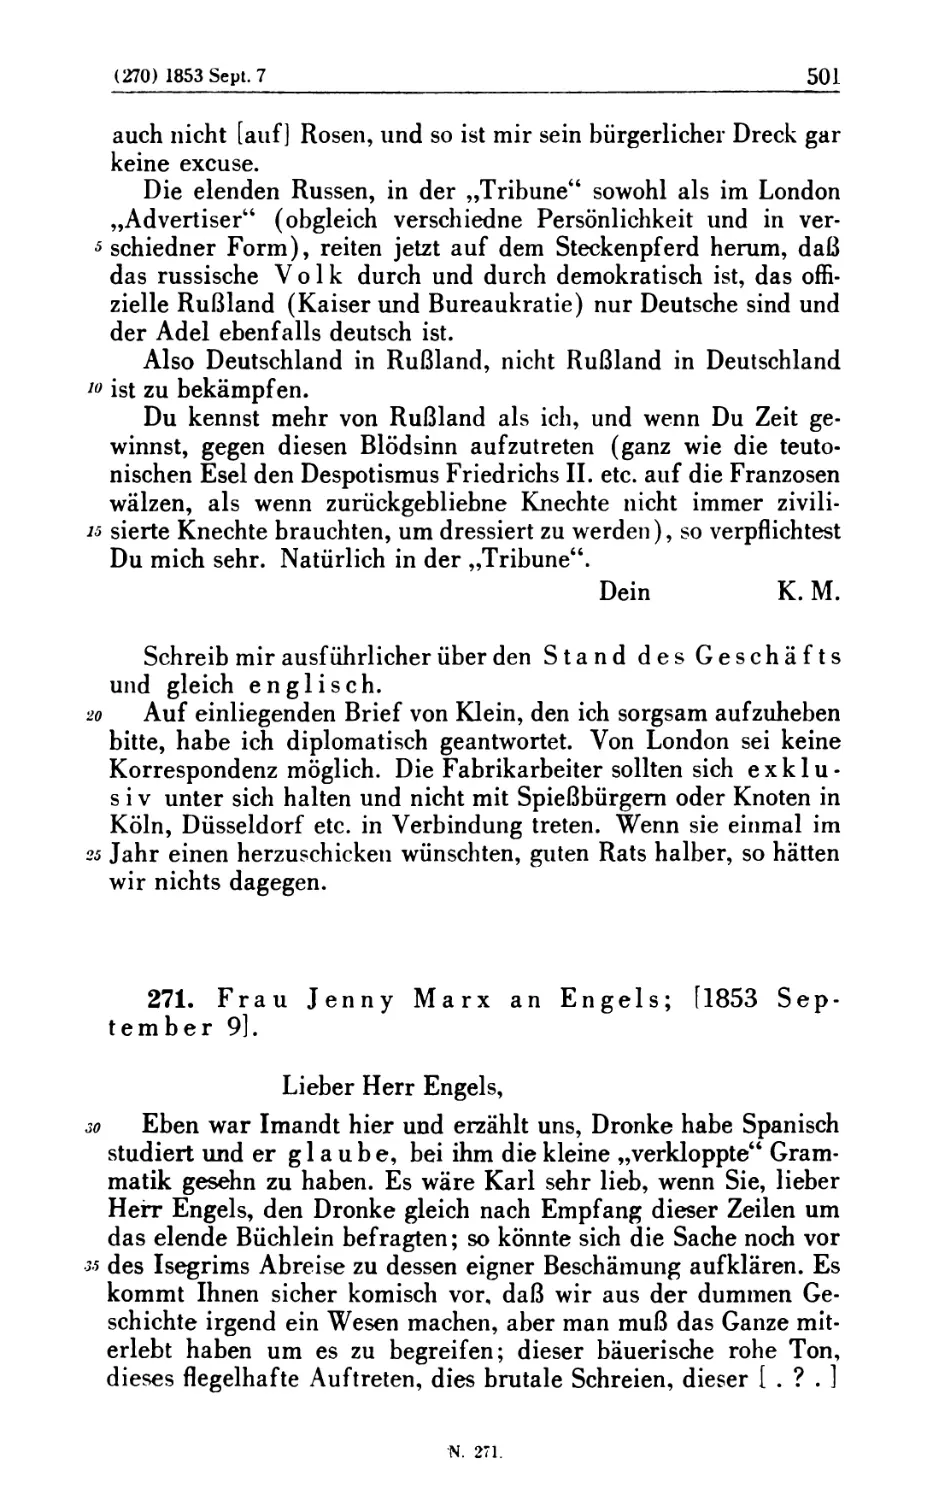 271. Frau Jenny Marx an Engels; [1853 September 9]